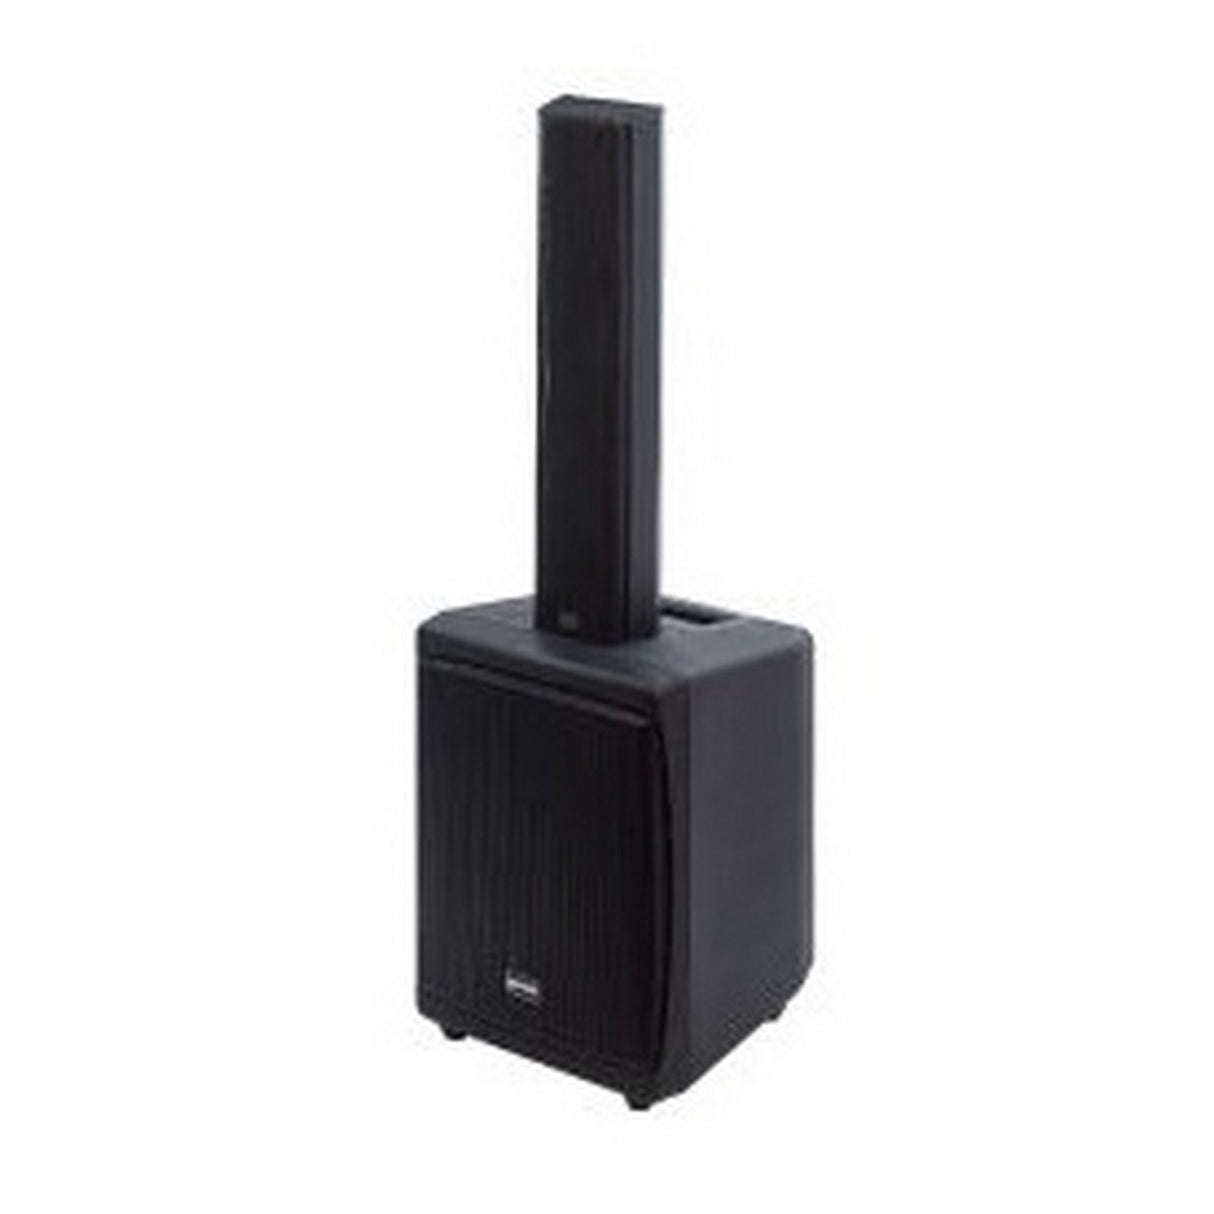 Gemini WRX-900TOGO | Rechargeable Portable Line Array Speaker System